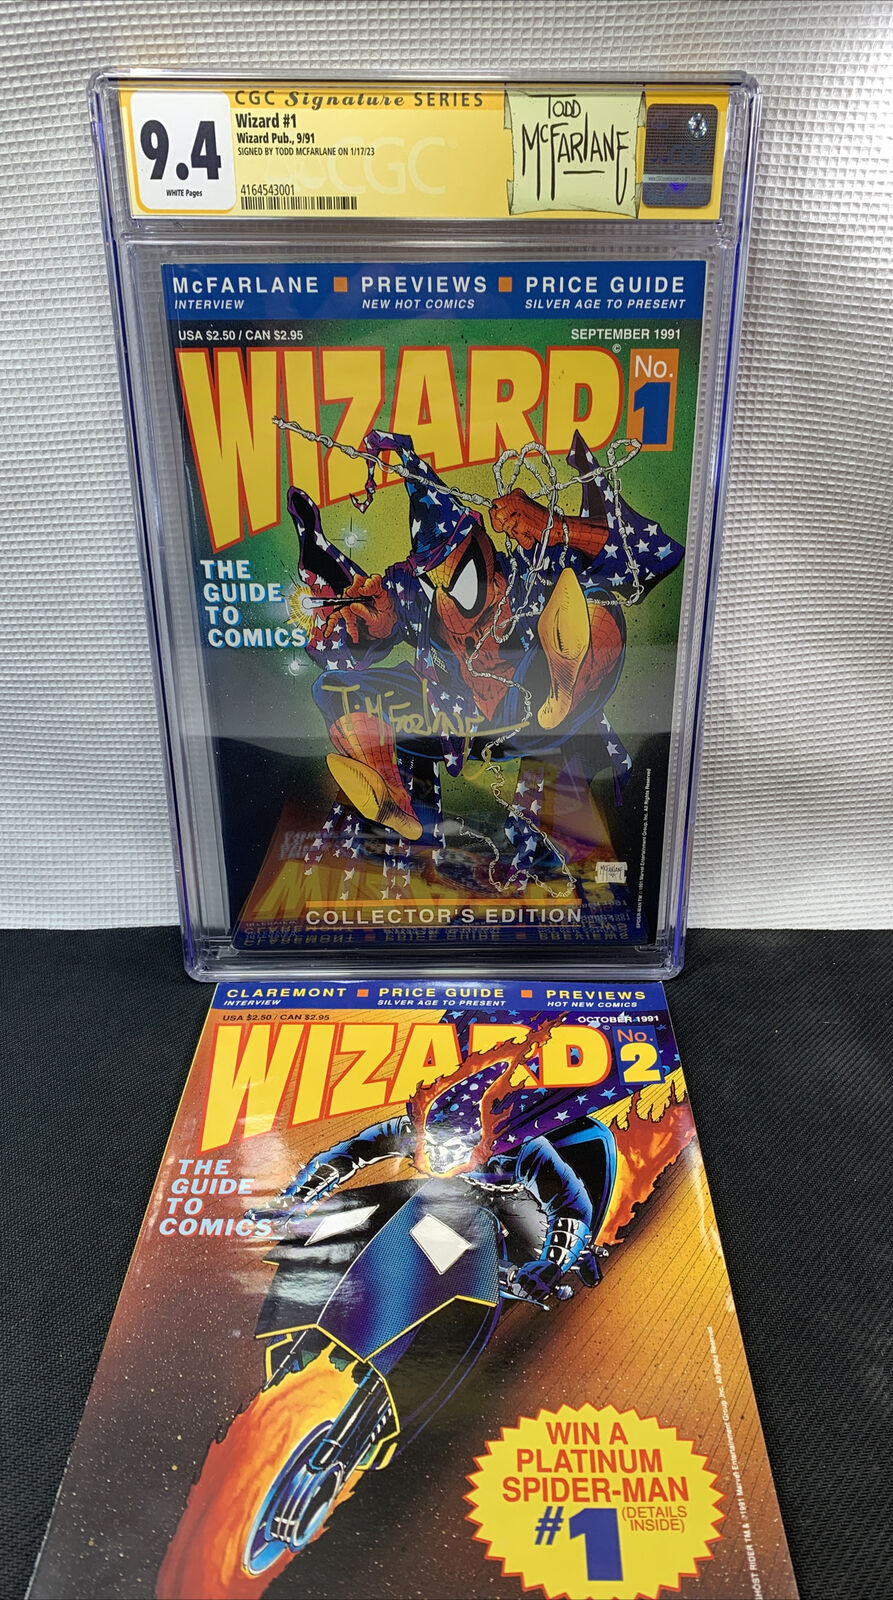 Wizard Magazine Guide To Comics #1 CGC 9.4 Signed Todd McFarlane Spiderman & #2